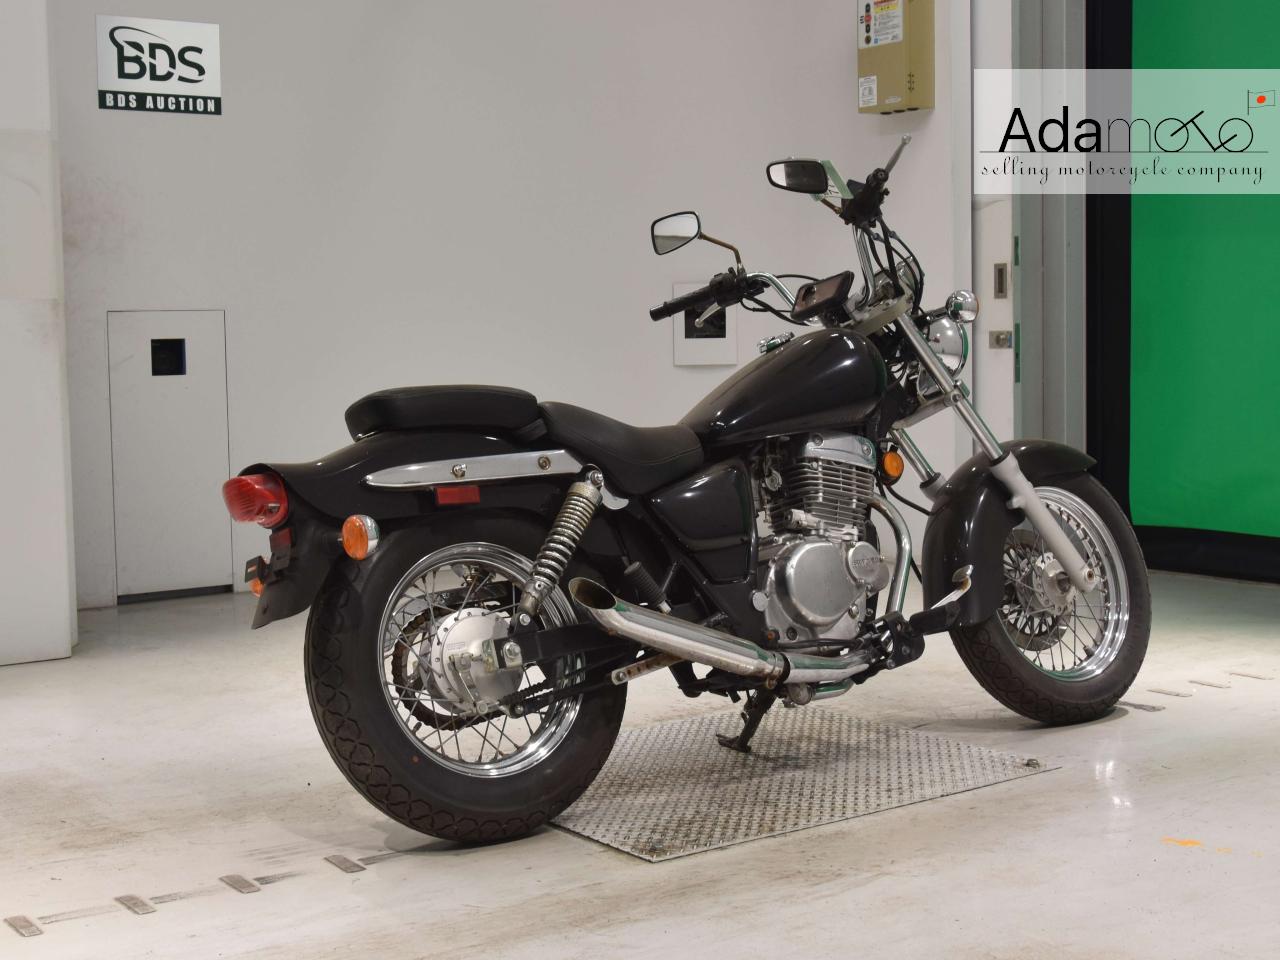 Suzuki GZ250 - Adamoto - Motorcycles from Japan